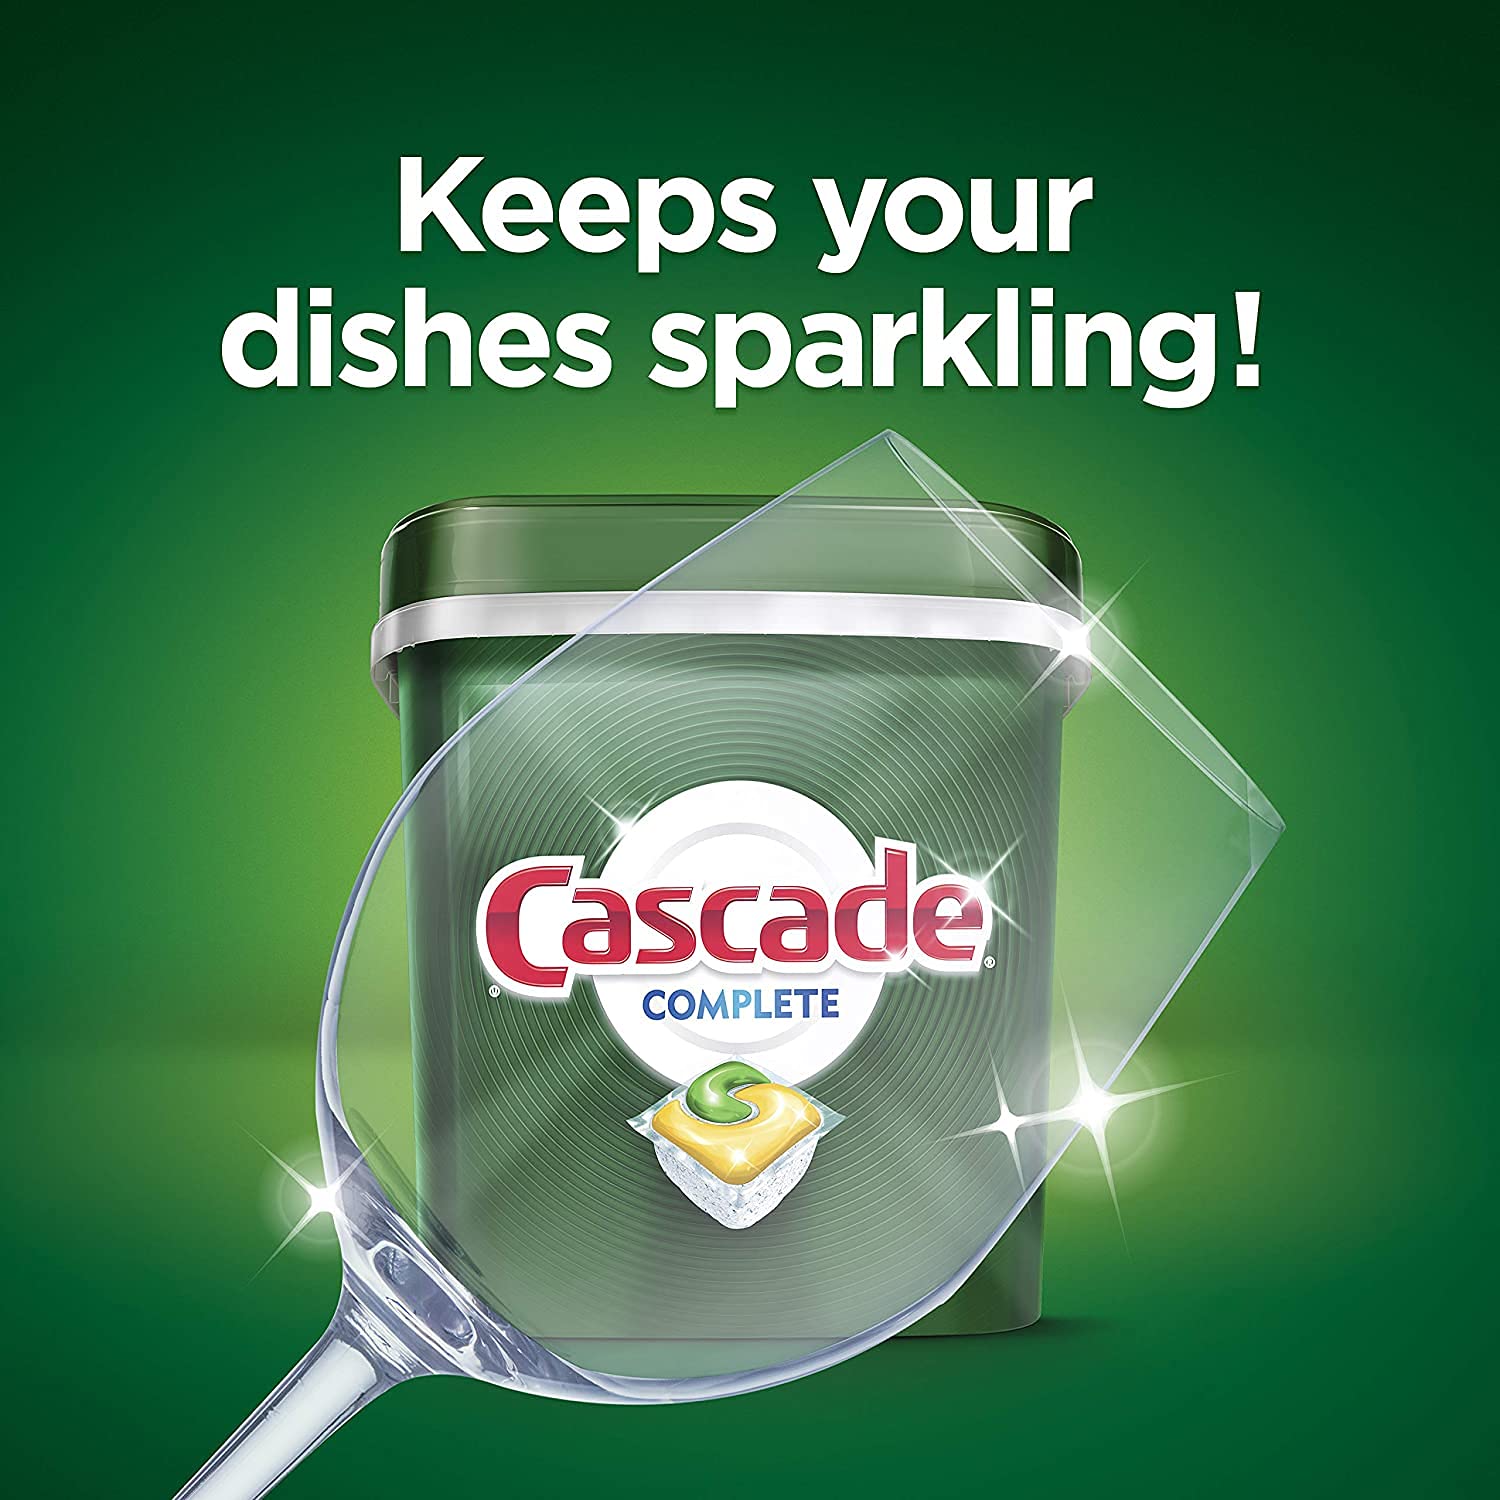 Cascade Complete Dishwasher Pods, Dishwasher tabs, Dish Washing Pods for Dishwasher, Dishwasher tablets, Lemon Scent ActionPacs, 78 Count